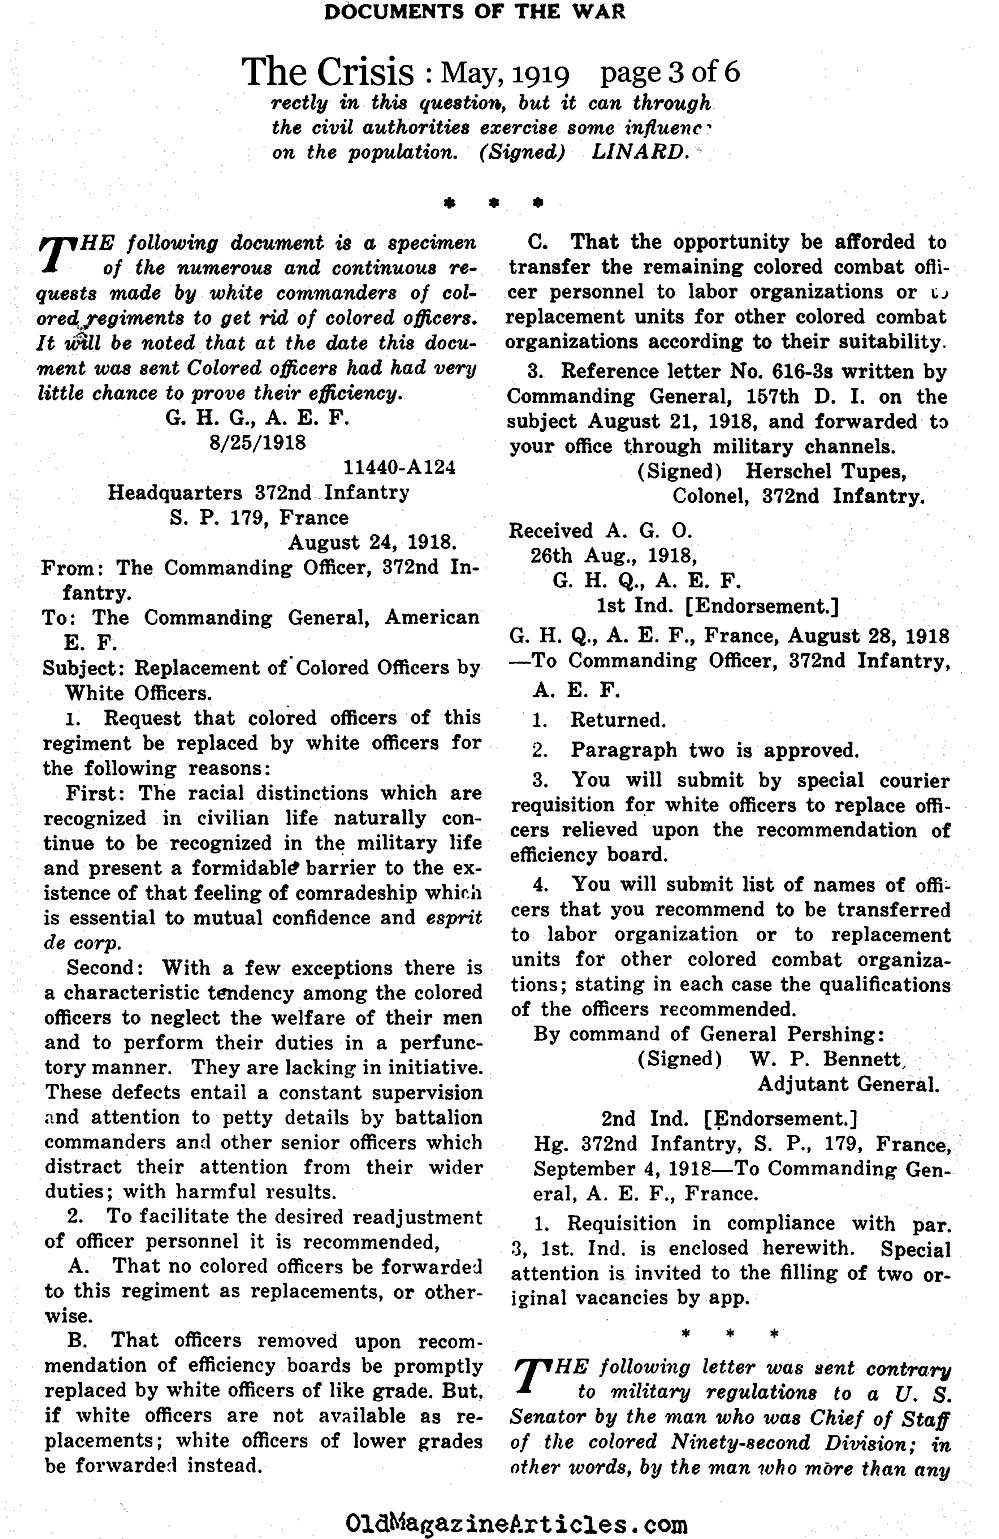 W.E.B. Du Boise and the Documents of U.S. Army Prejudice  (The Crises, 1919